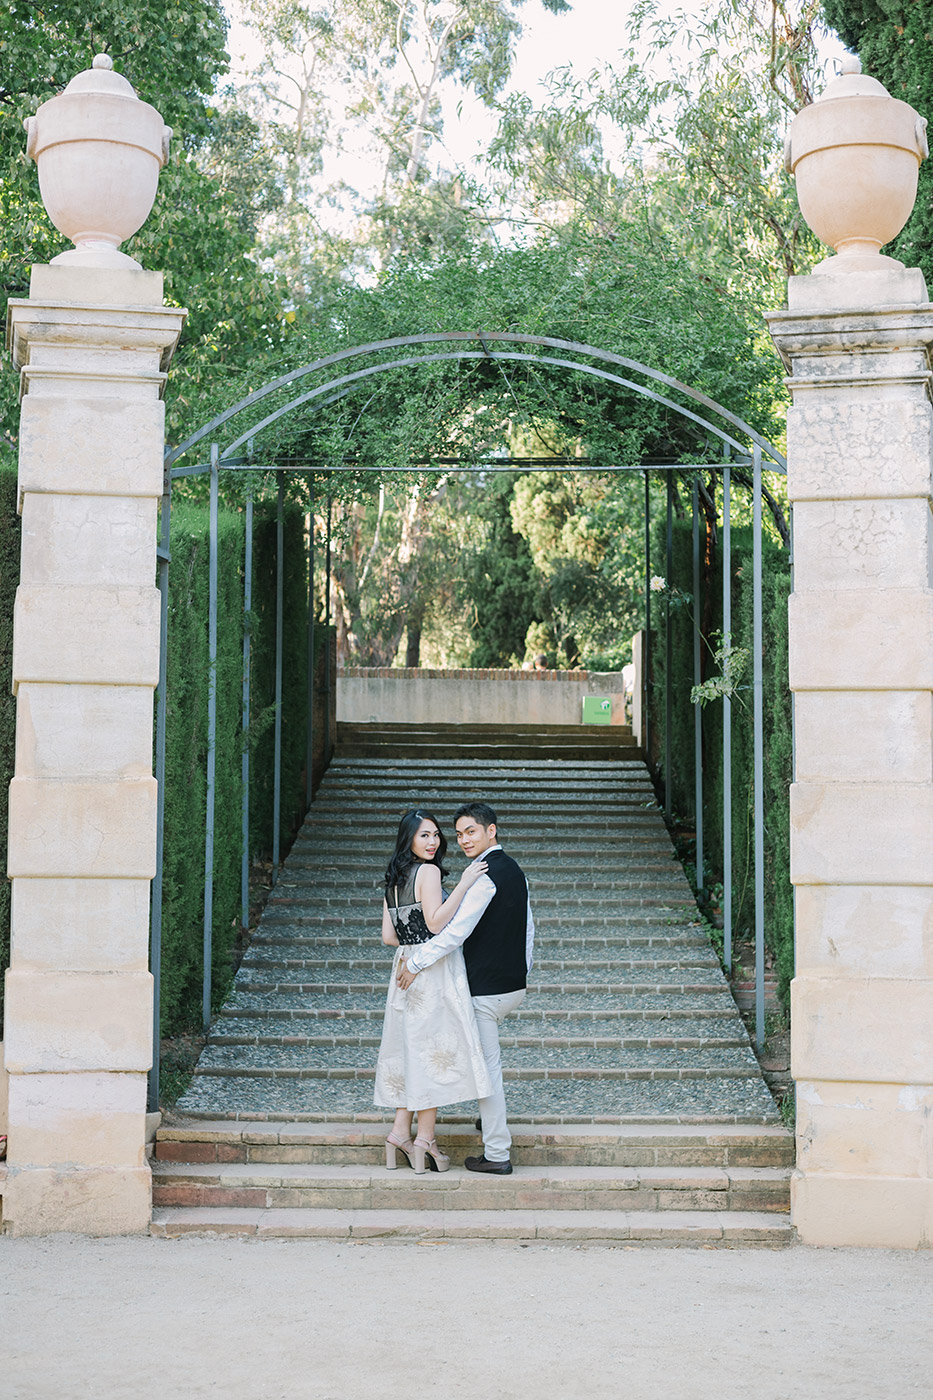 Classic and elegant engagement at Labyrinth Park | Elegant pre wedding photoshoot Barcelona |Engagement photographer Barcelona | Fine Art Photography